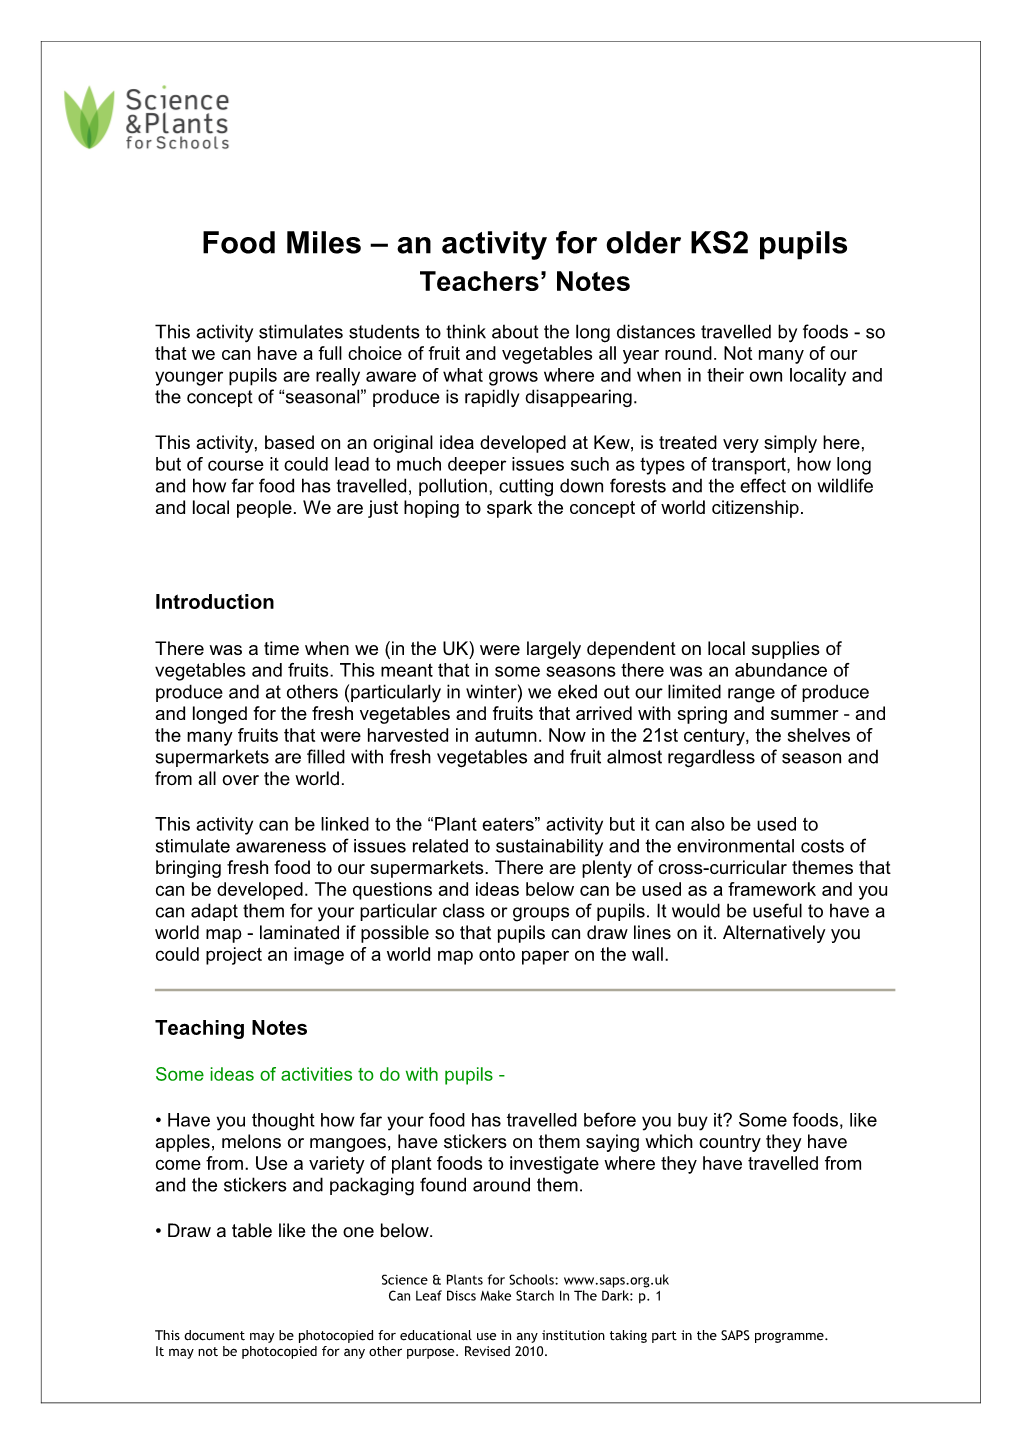 Food Miles an Activity for Older KS2 Pupils